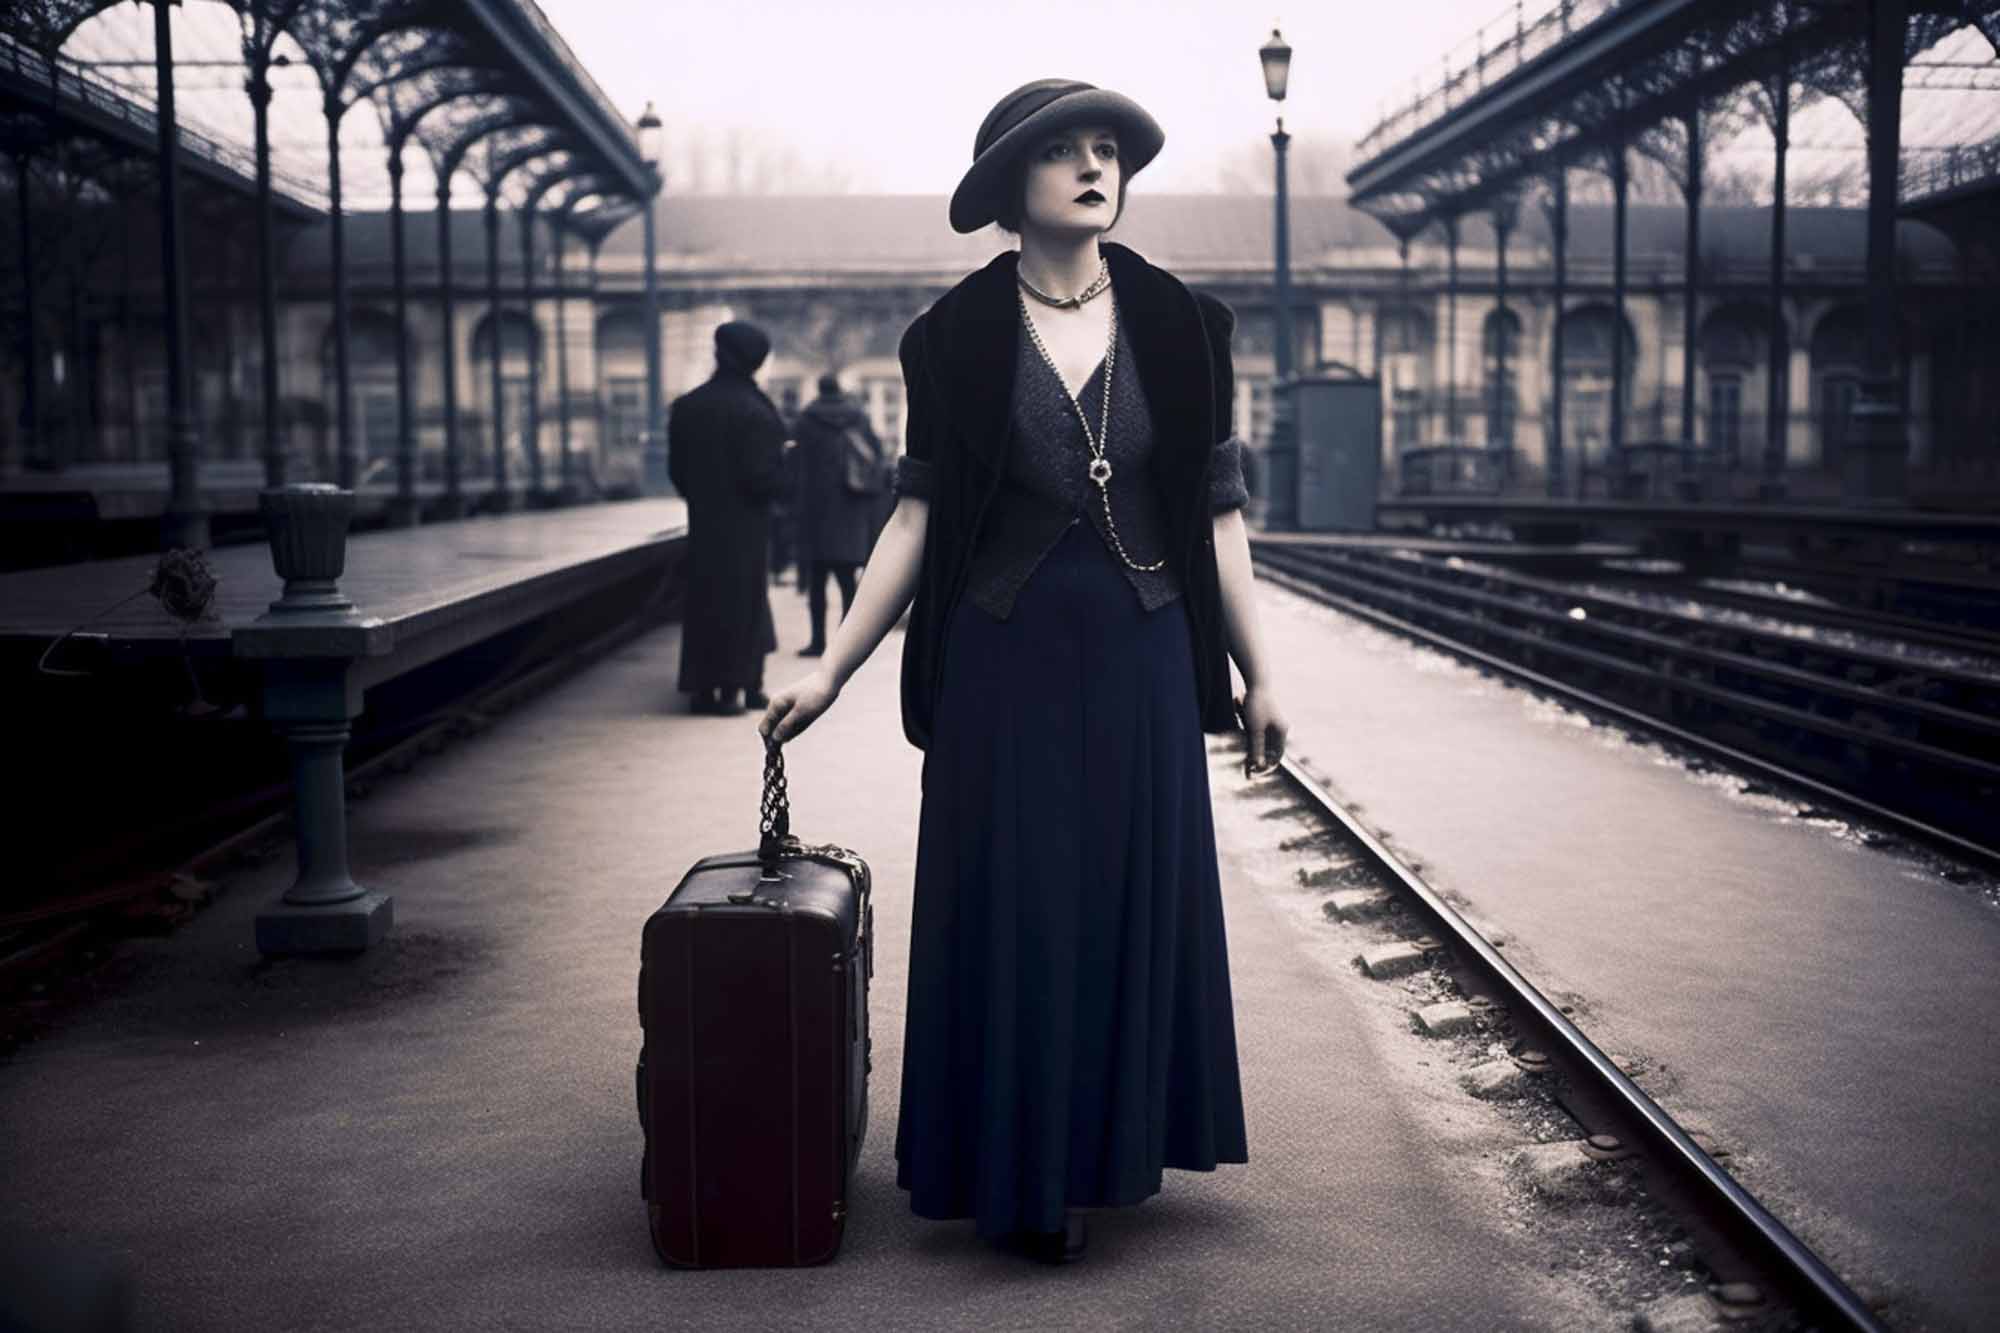 zavesmith_at_train_station_in_paris_1920s_steam_trains_behind_h_2c52436e-0308-4a41-9448-6fd1bf81d99c